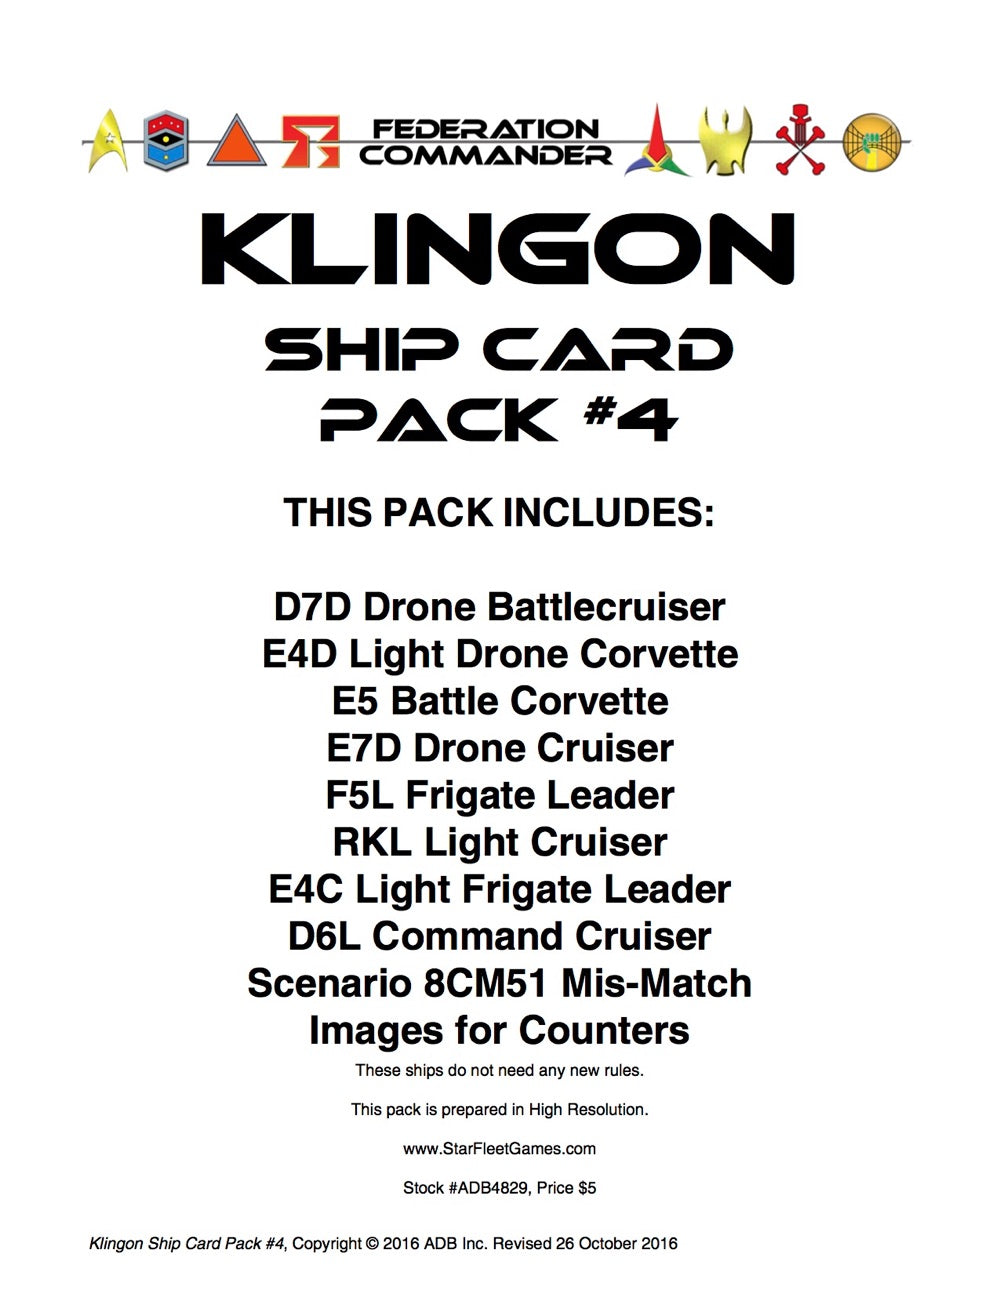 Federation Commander: Klingon Ship Card Pack #4